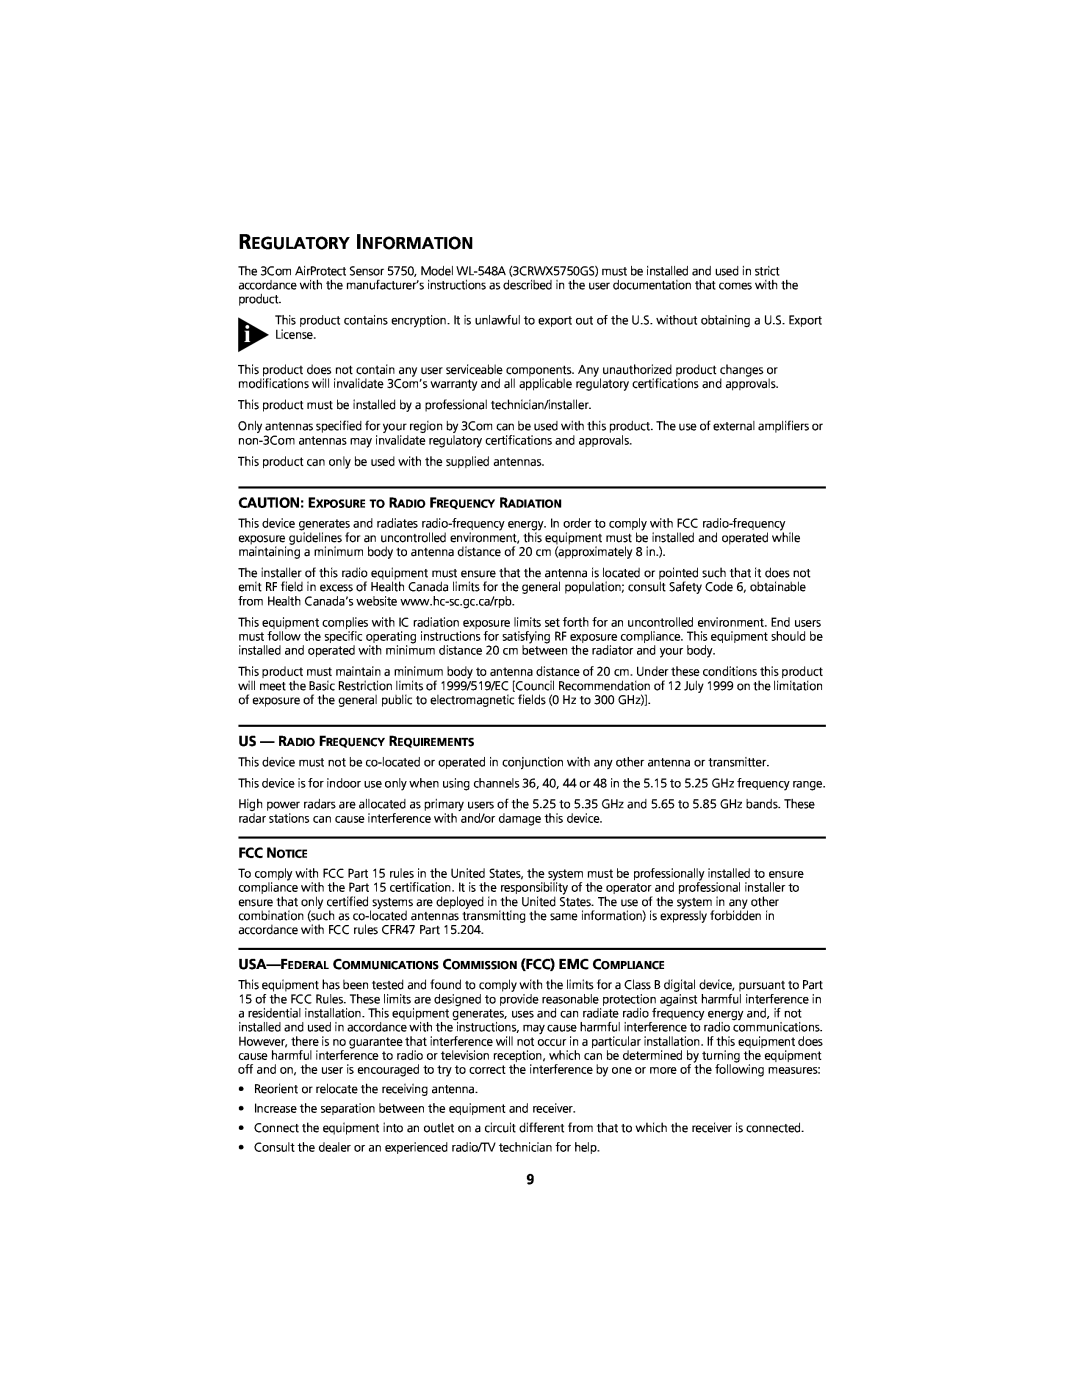 3Com WL-548A manual Regulatory Information, Fcc Notice 